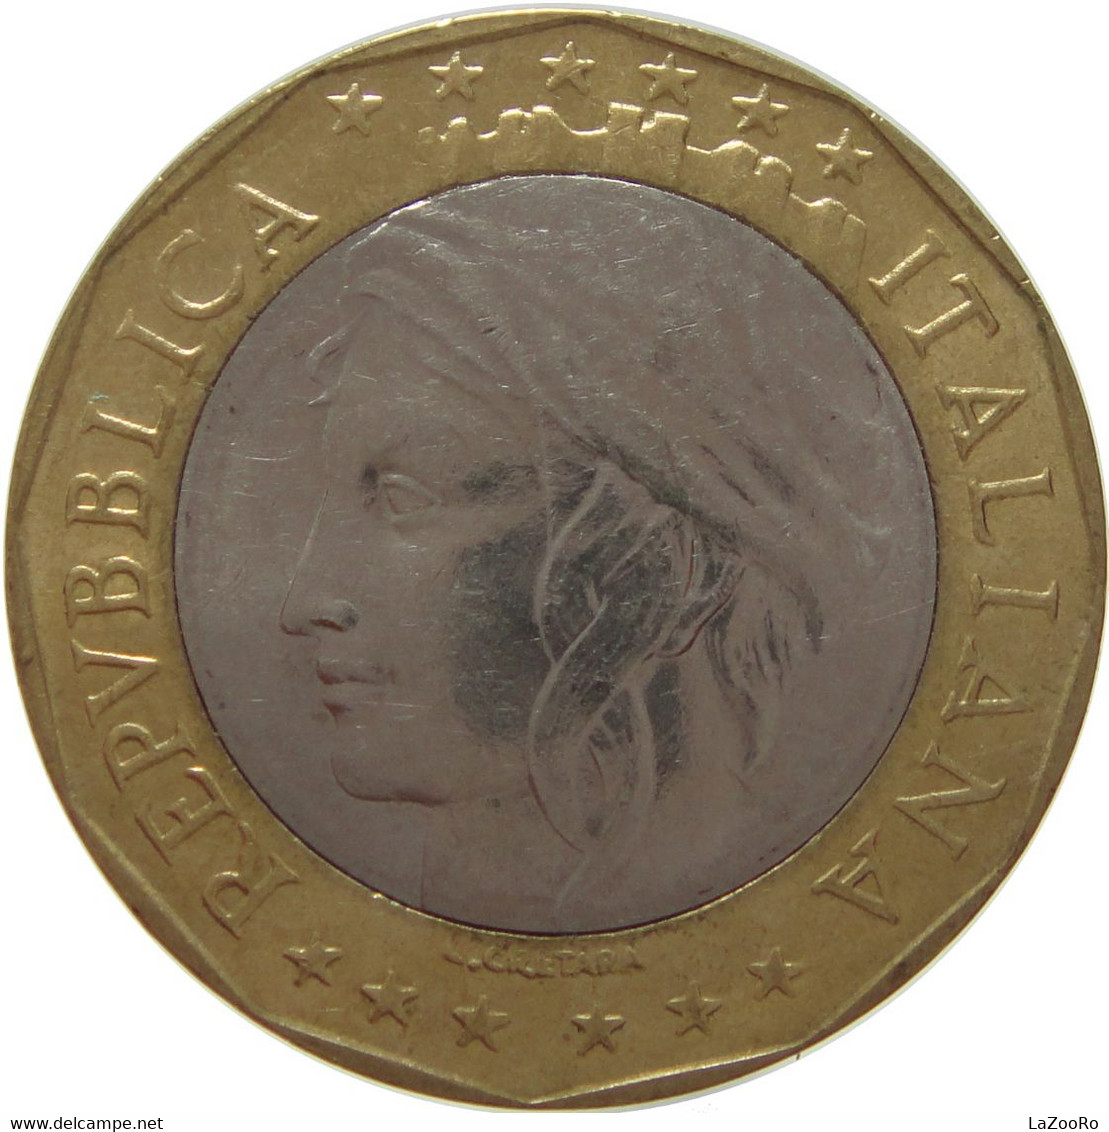 LaZooRo: Italy 1000 Lire 1997 XF / UNC European Union - 1 000 Liras